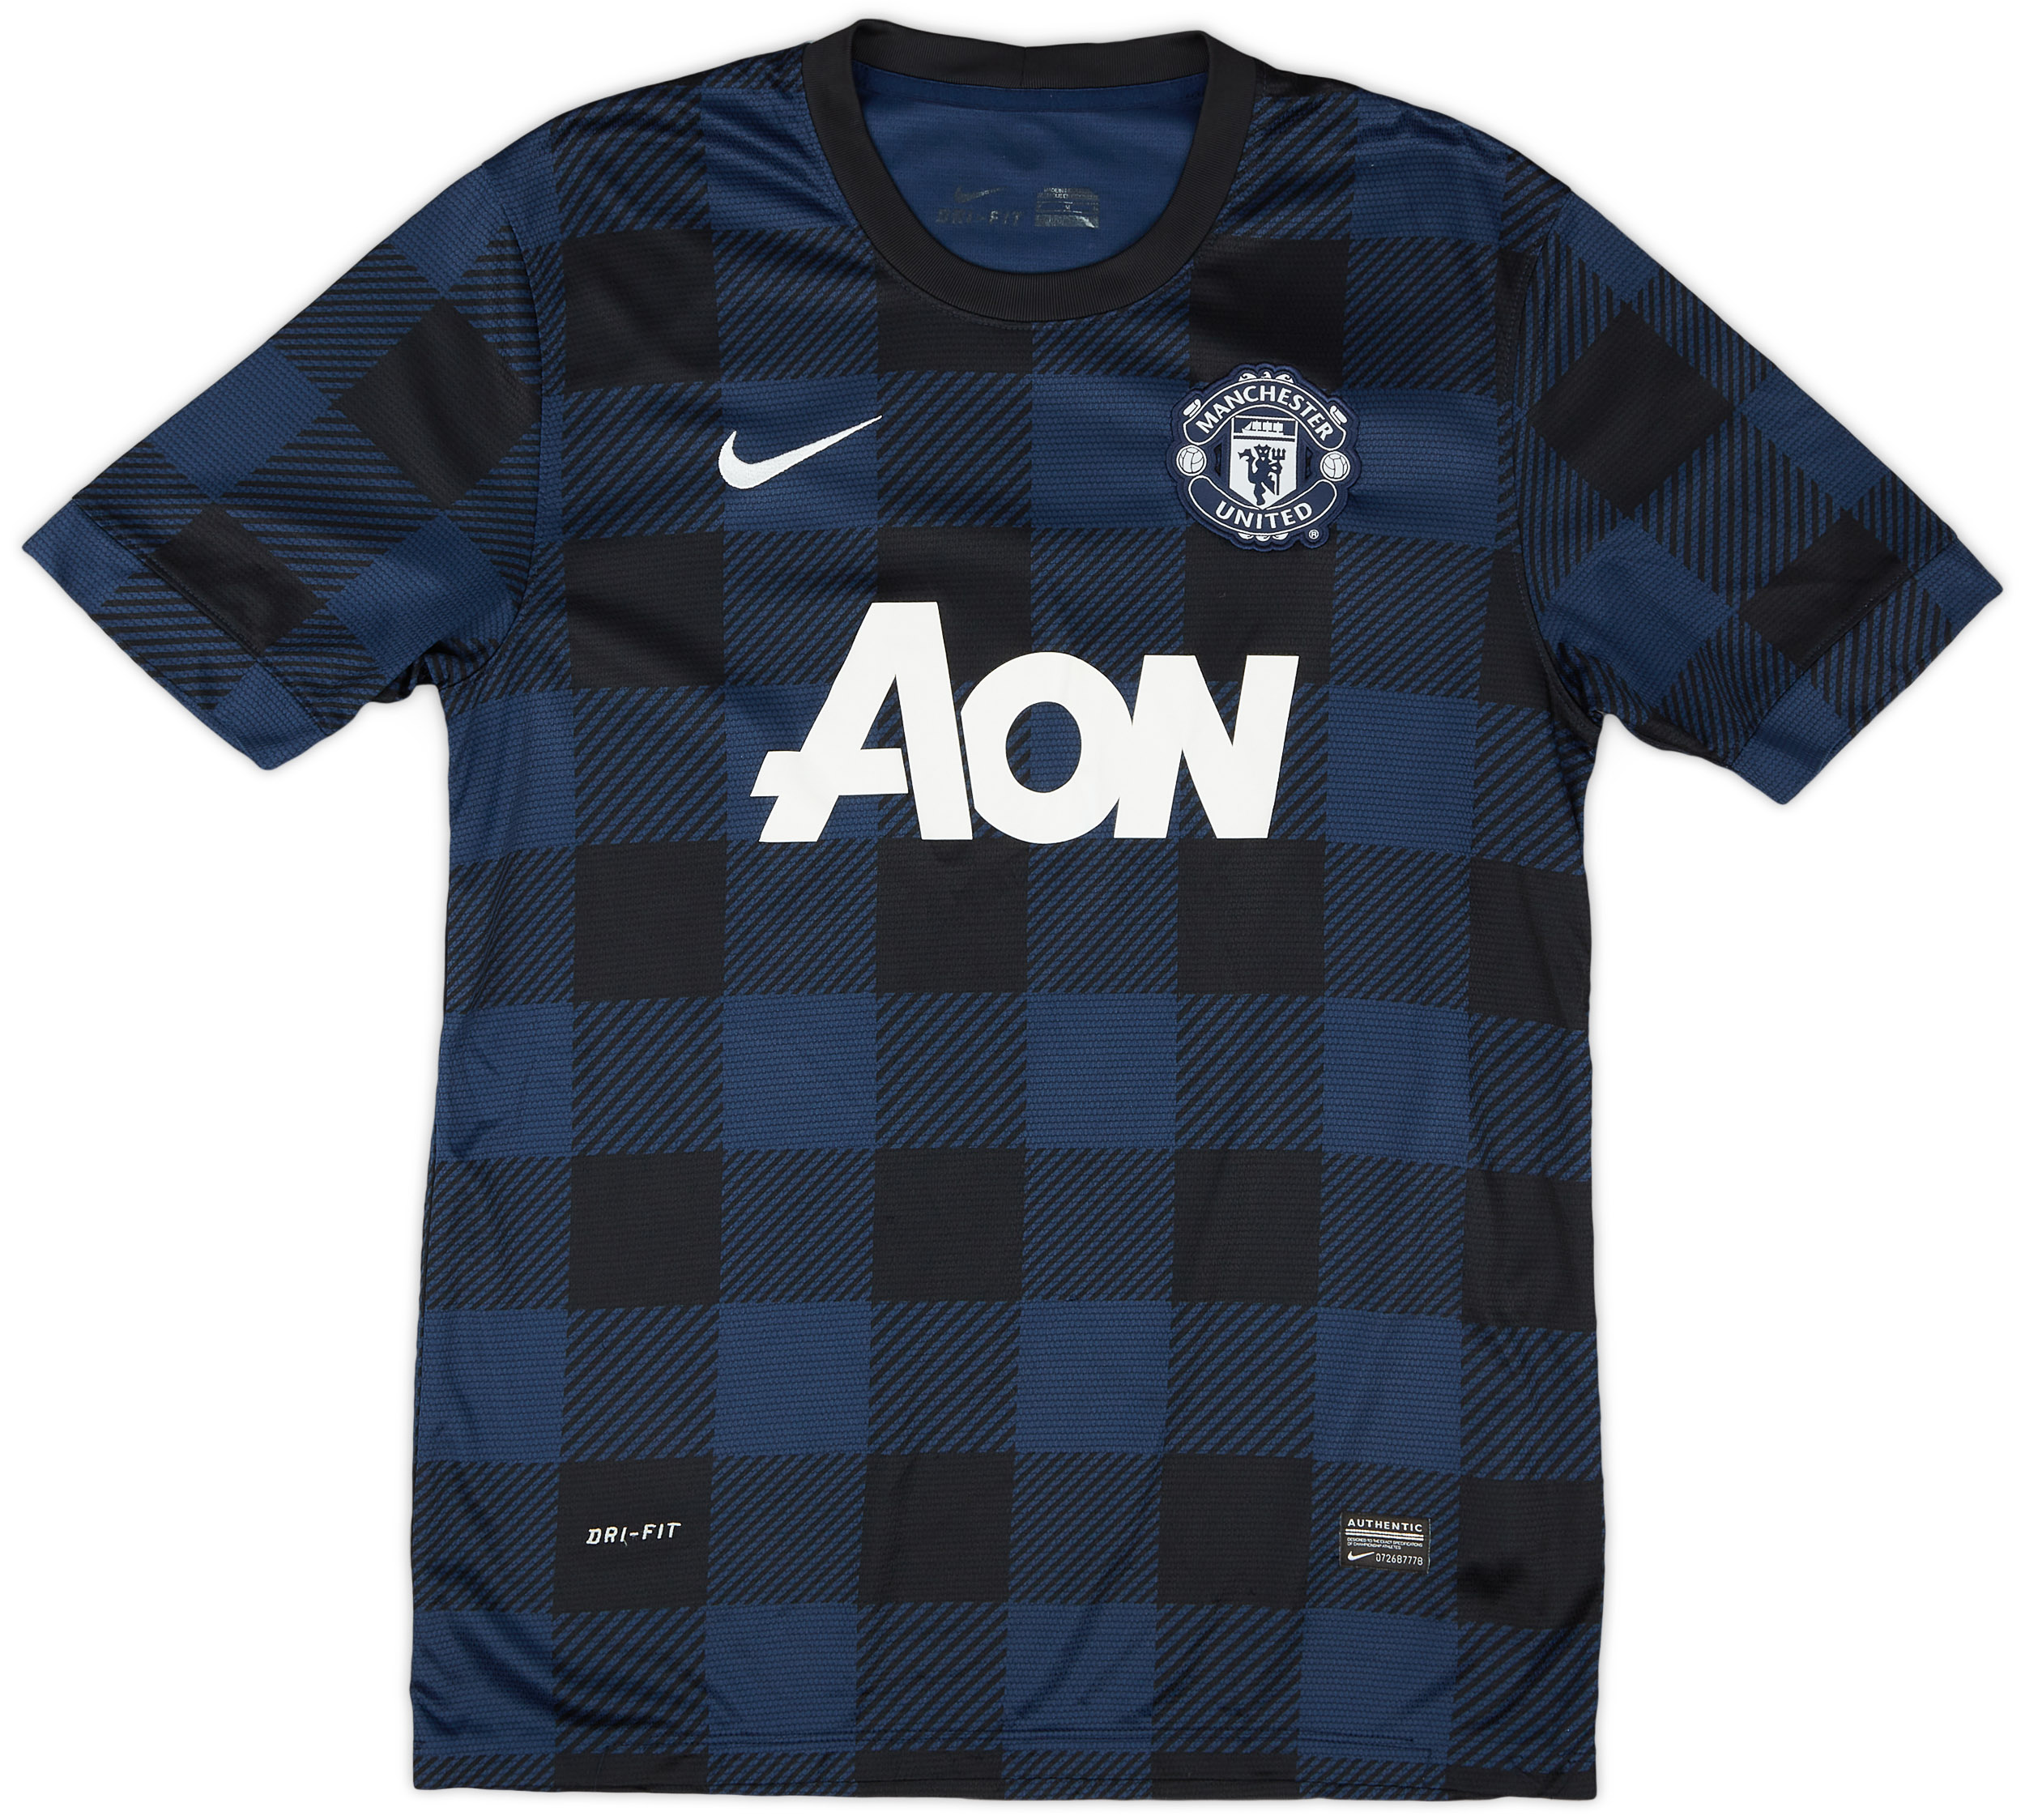 2013-14 Manchester United Away Shirt - 7/10 - ()